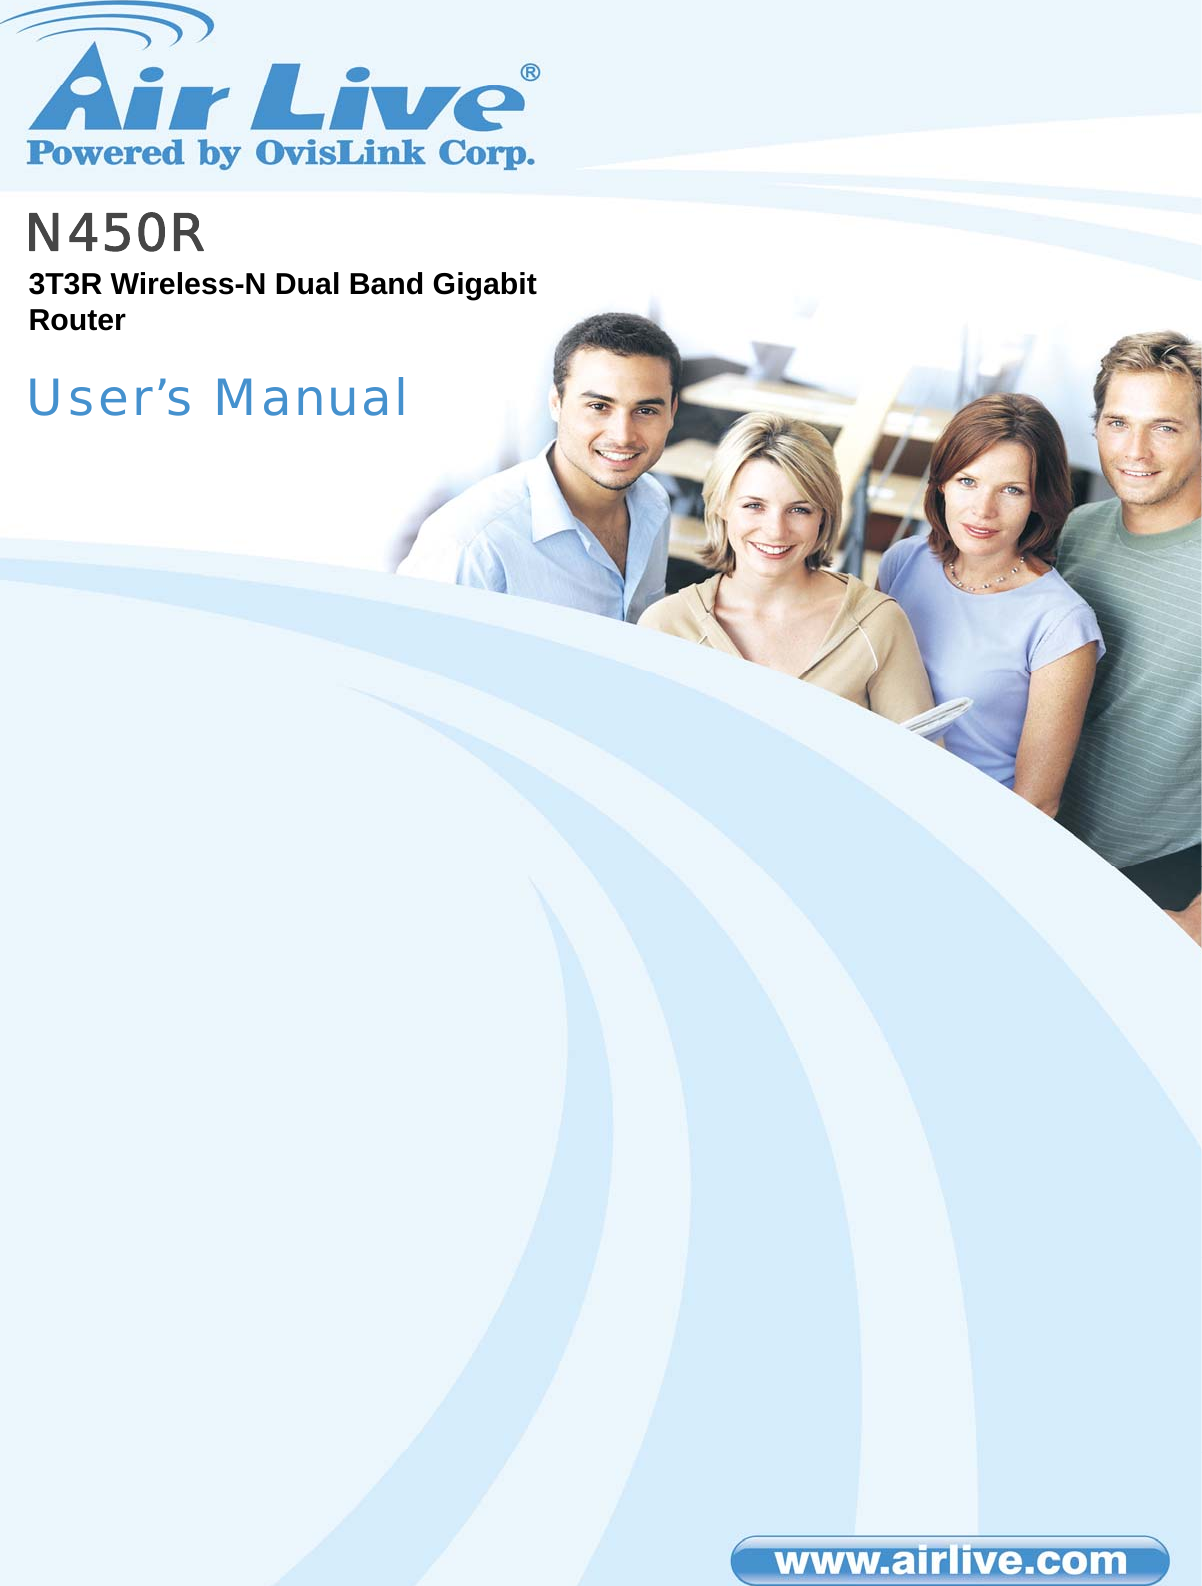  1 N450R 3T3R Wireless-N Dual Band Gigabit Router User’s Manual 